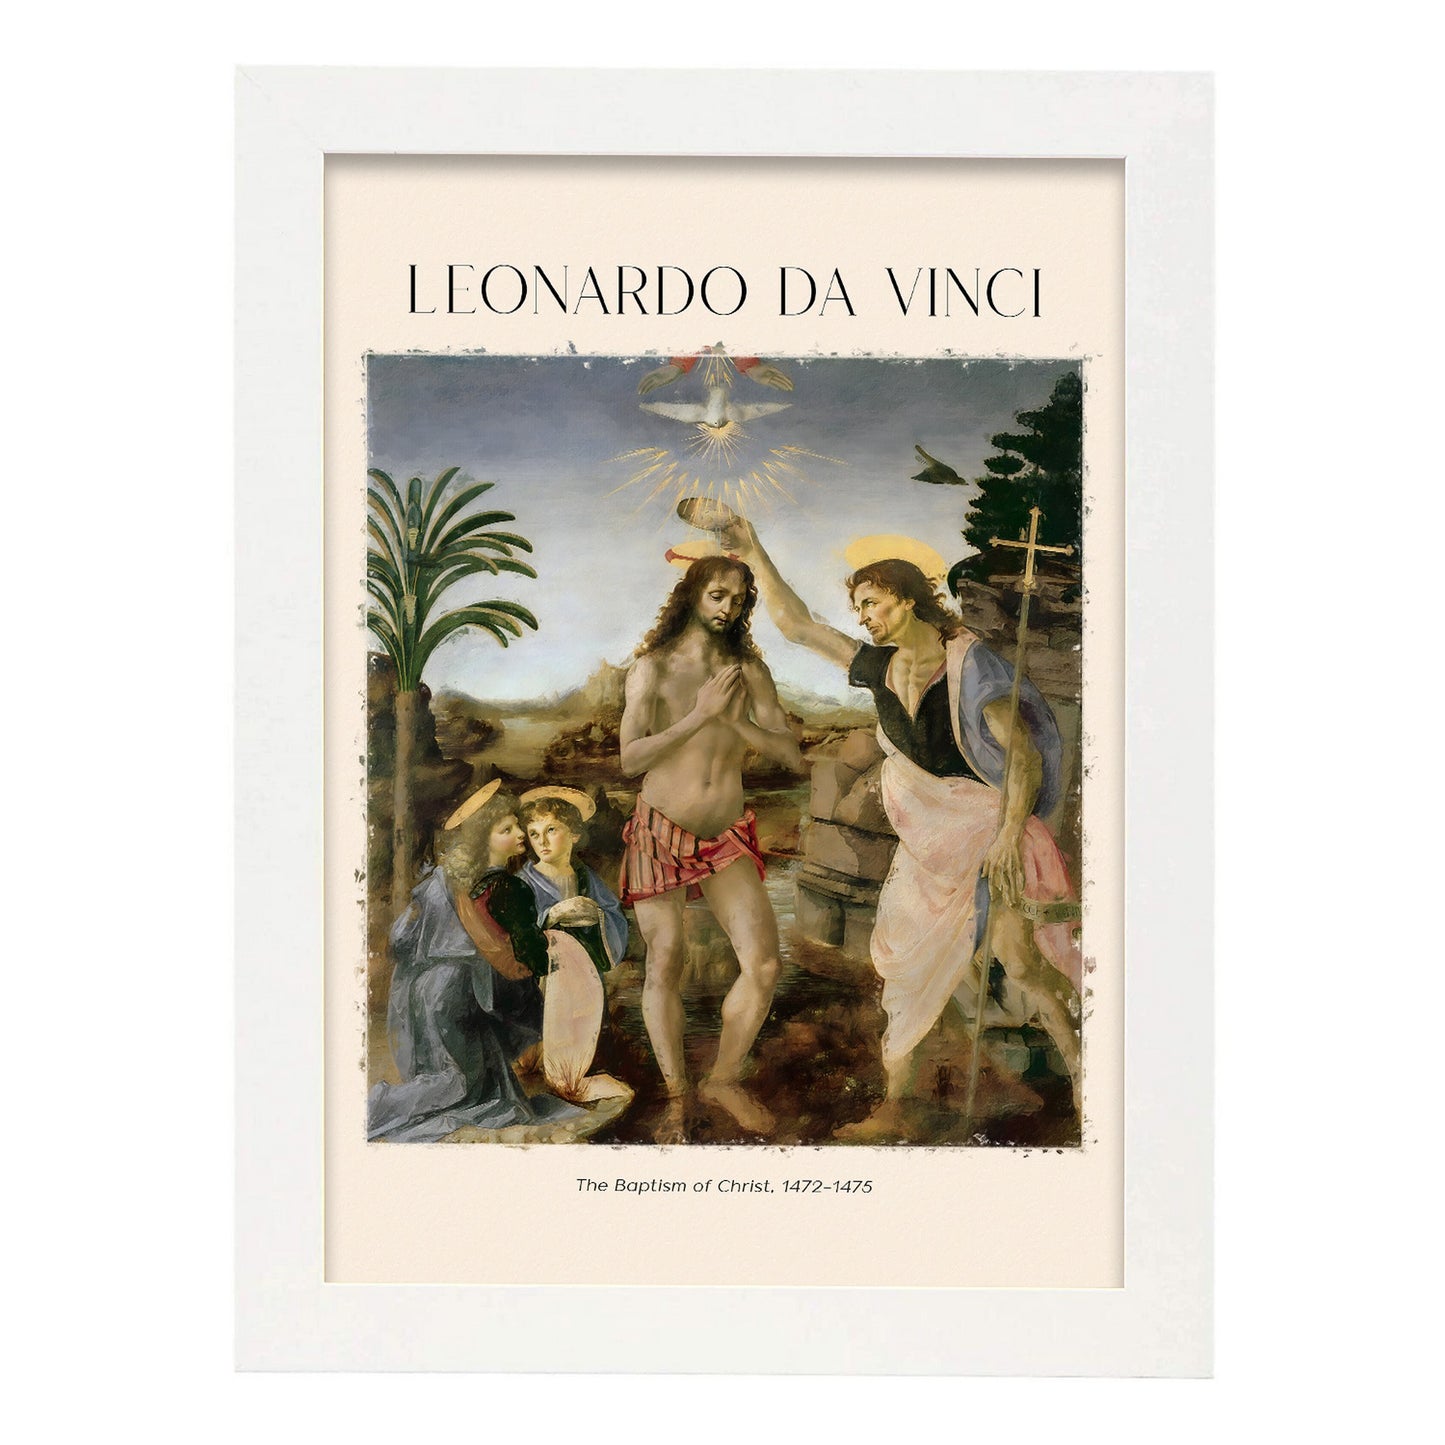 Lámina de Bautismo de Cristo inspirada en Leonardo da Vinci